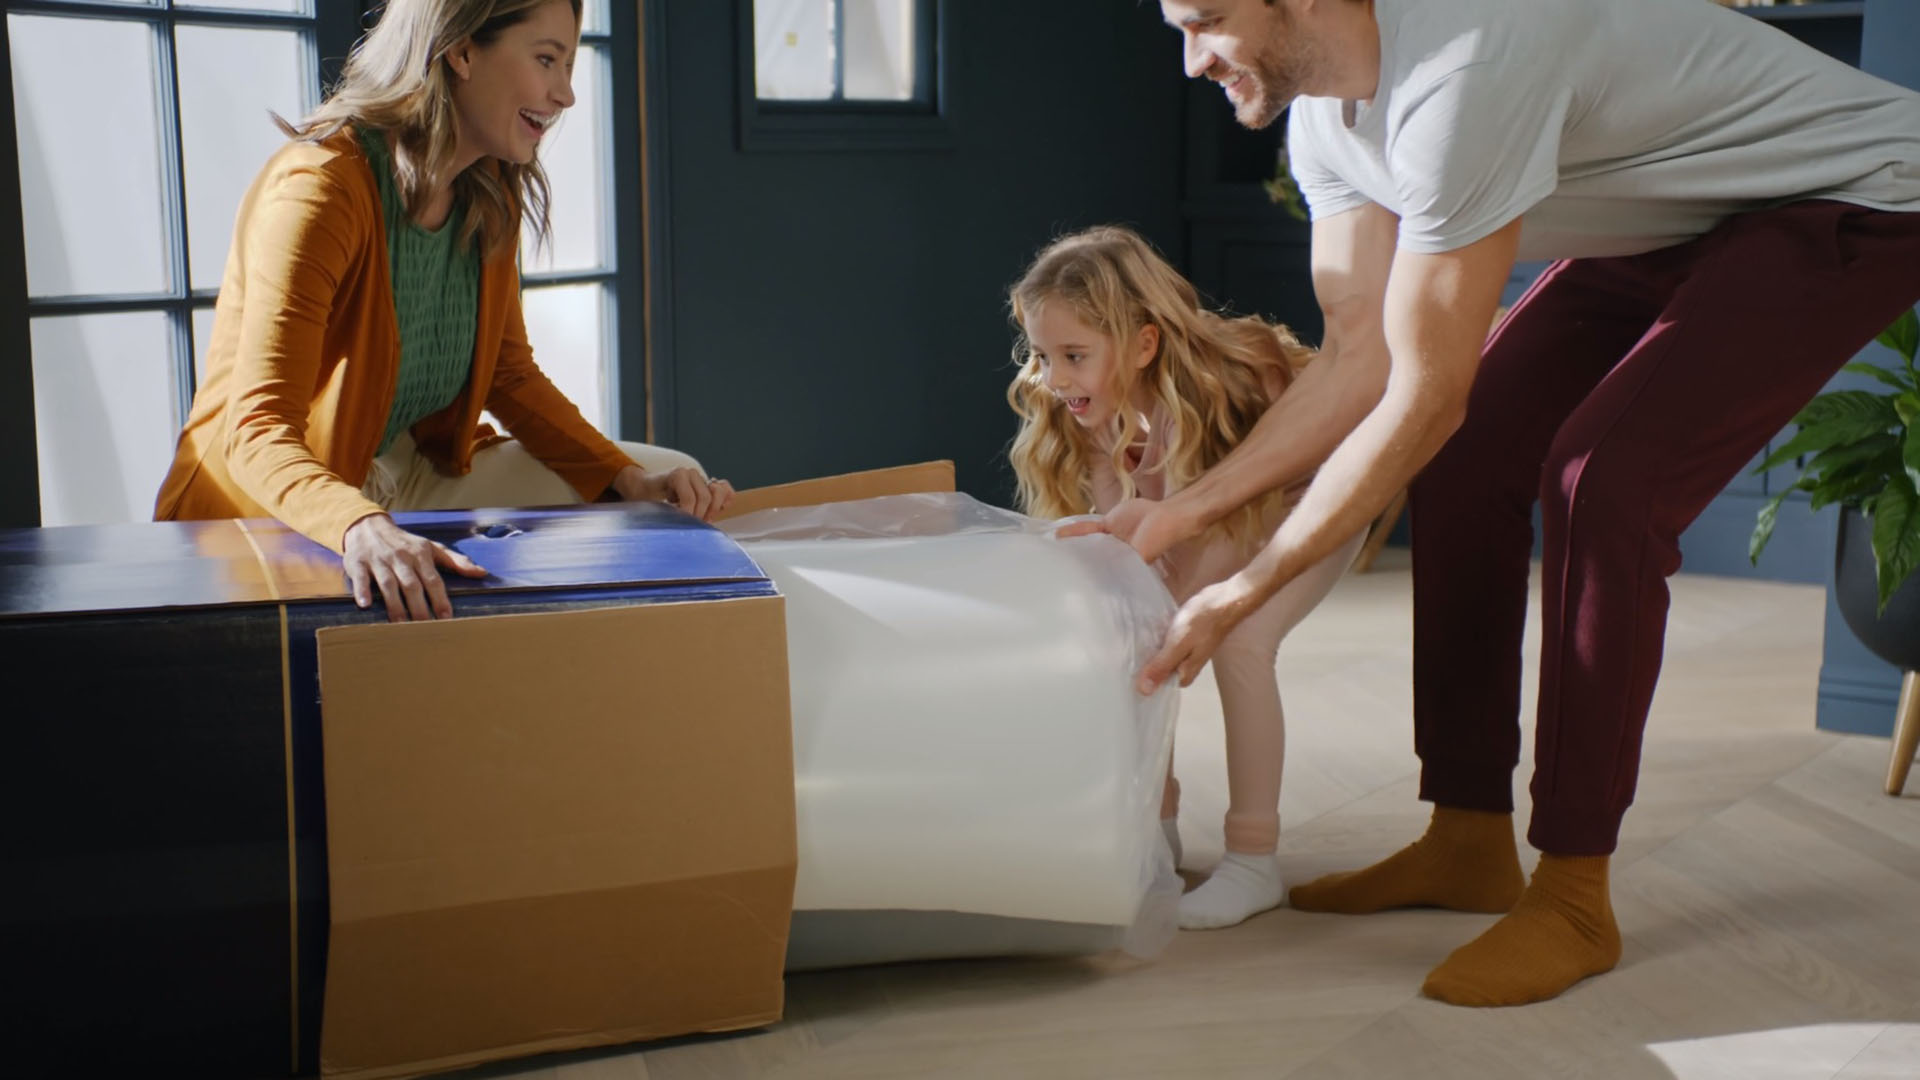 A family unboxing a Dreamcloud mattress in Allentown, Pennsylvania